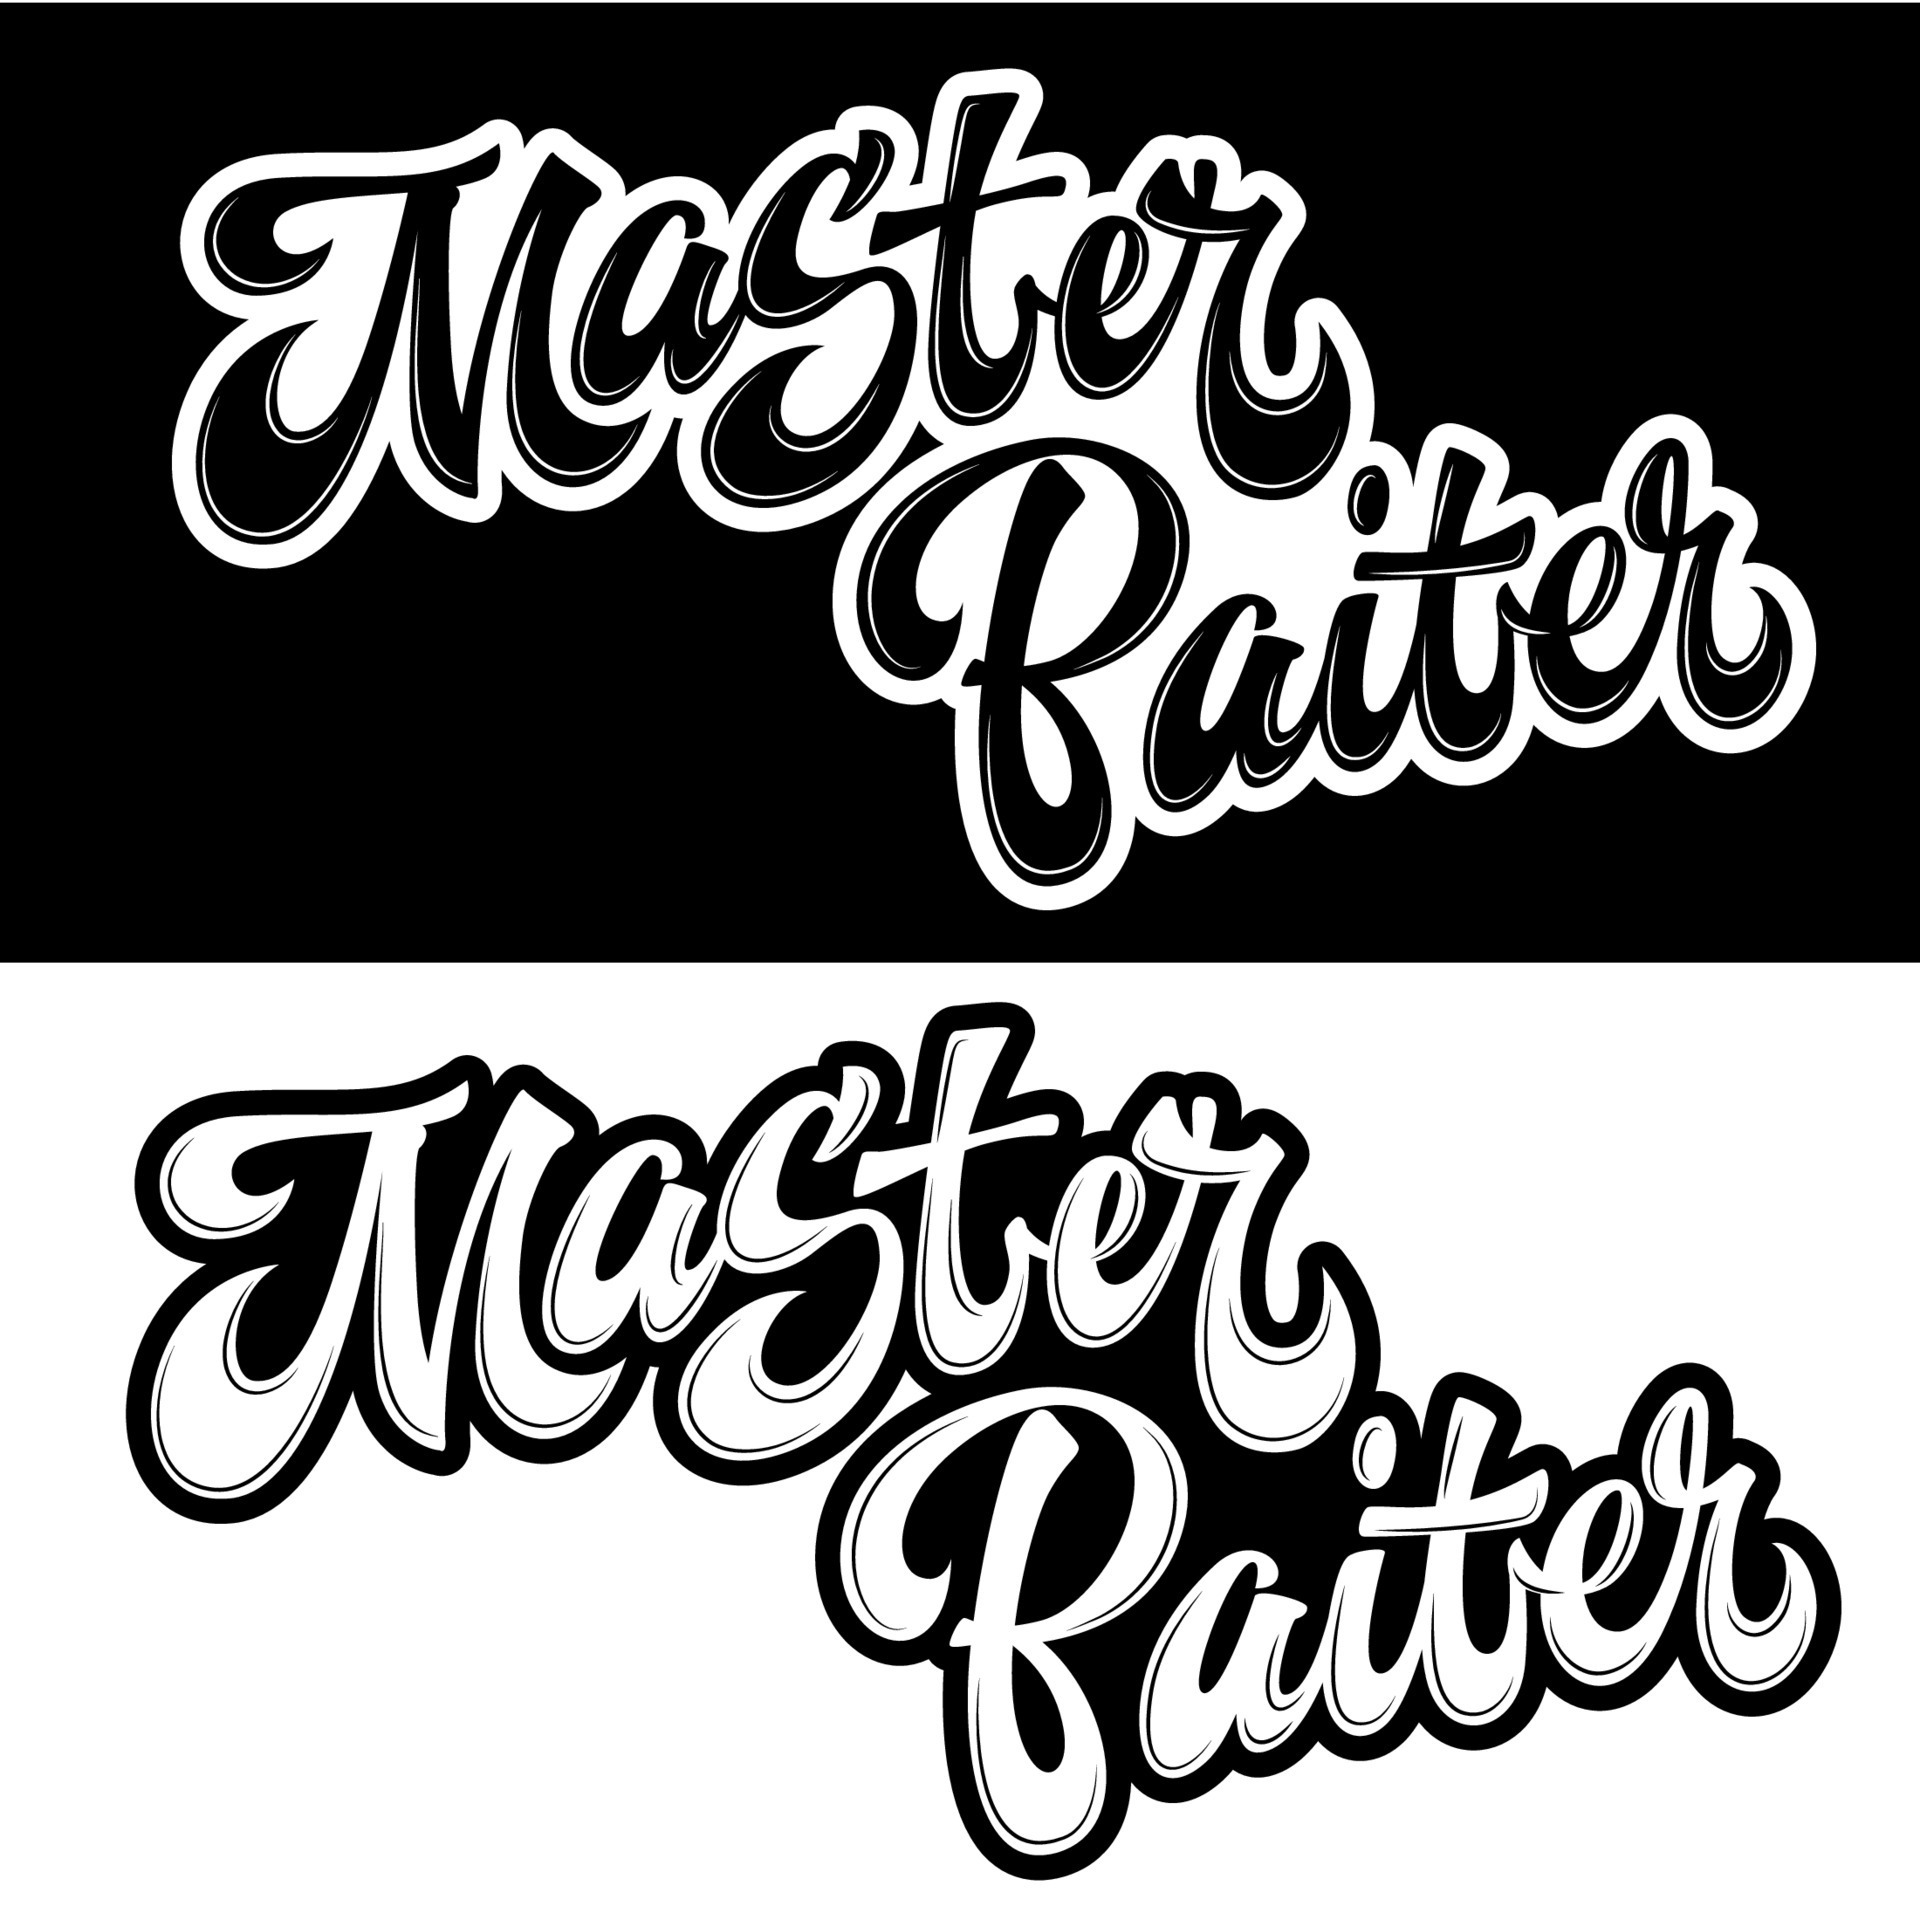 https://static.vecteezy.com/system/resources/previews/024/224/323/original/master-baiter-set-of-hand-drawn-lettering-logo-phrase-vector.jpg